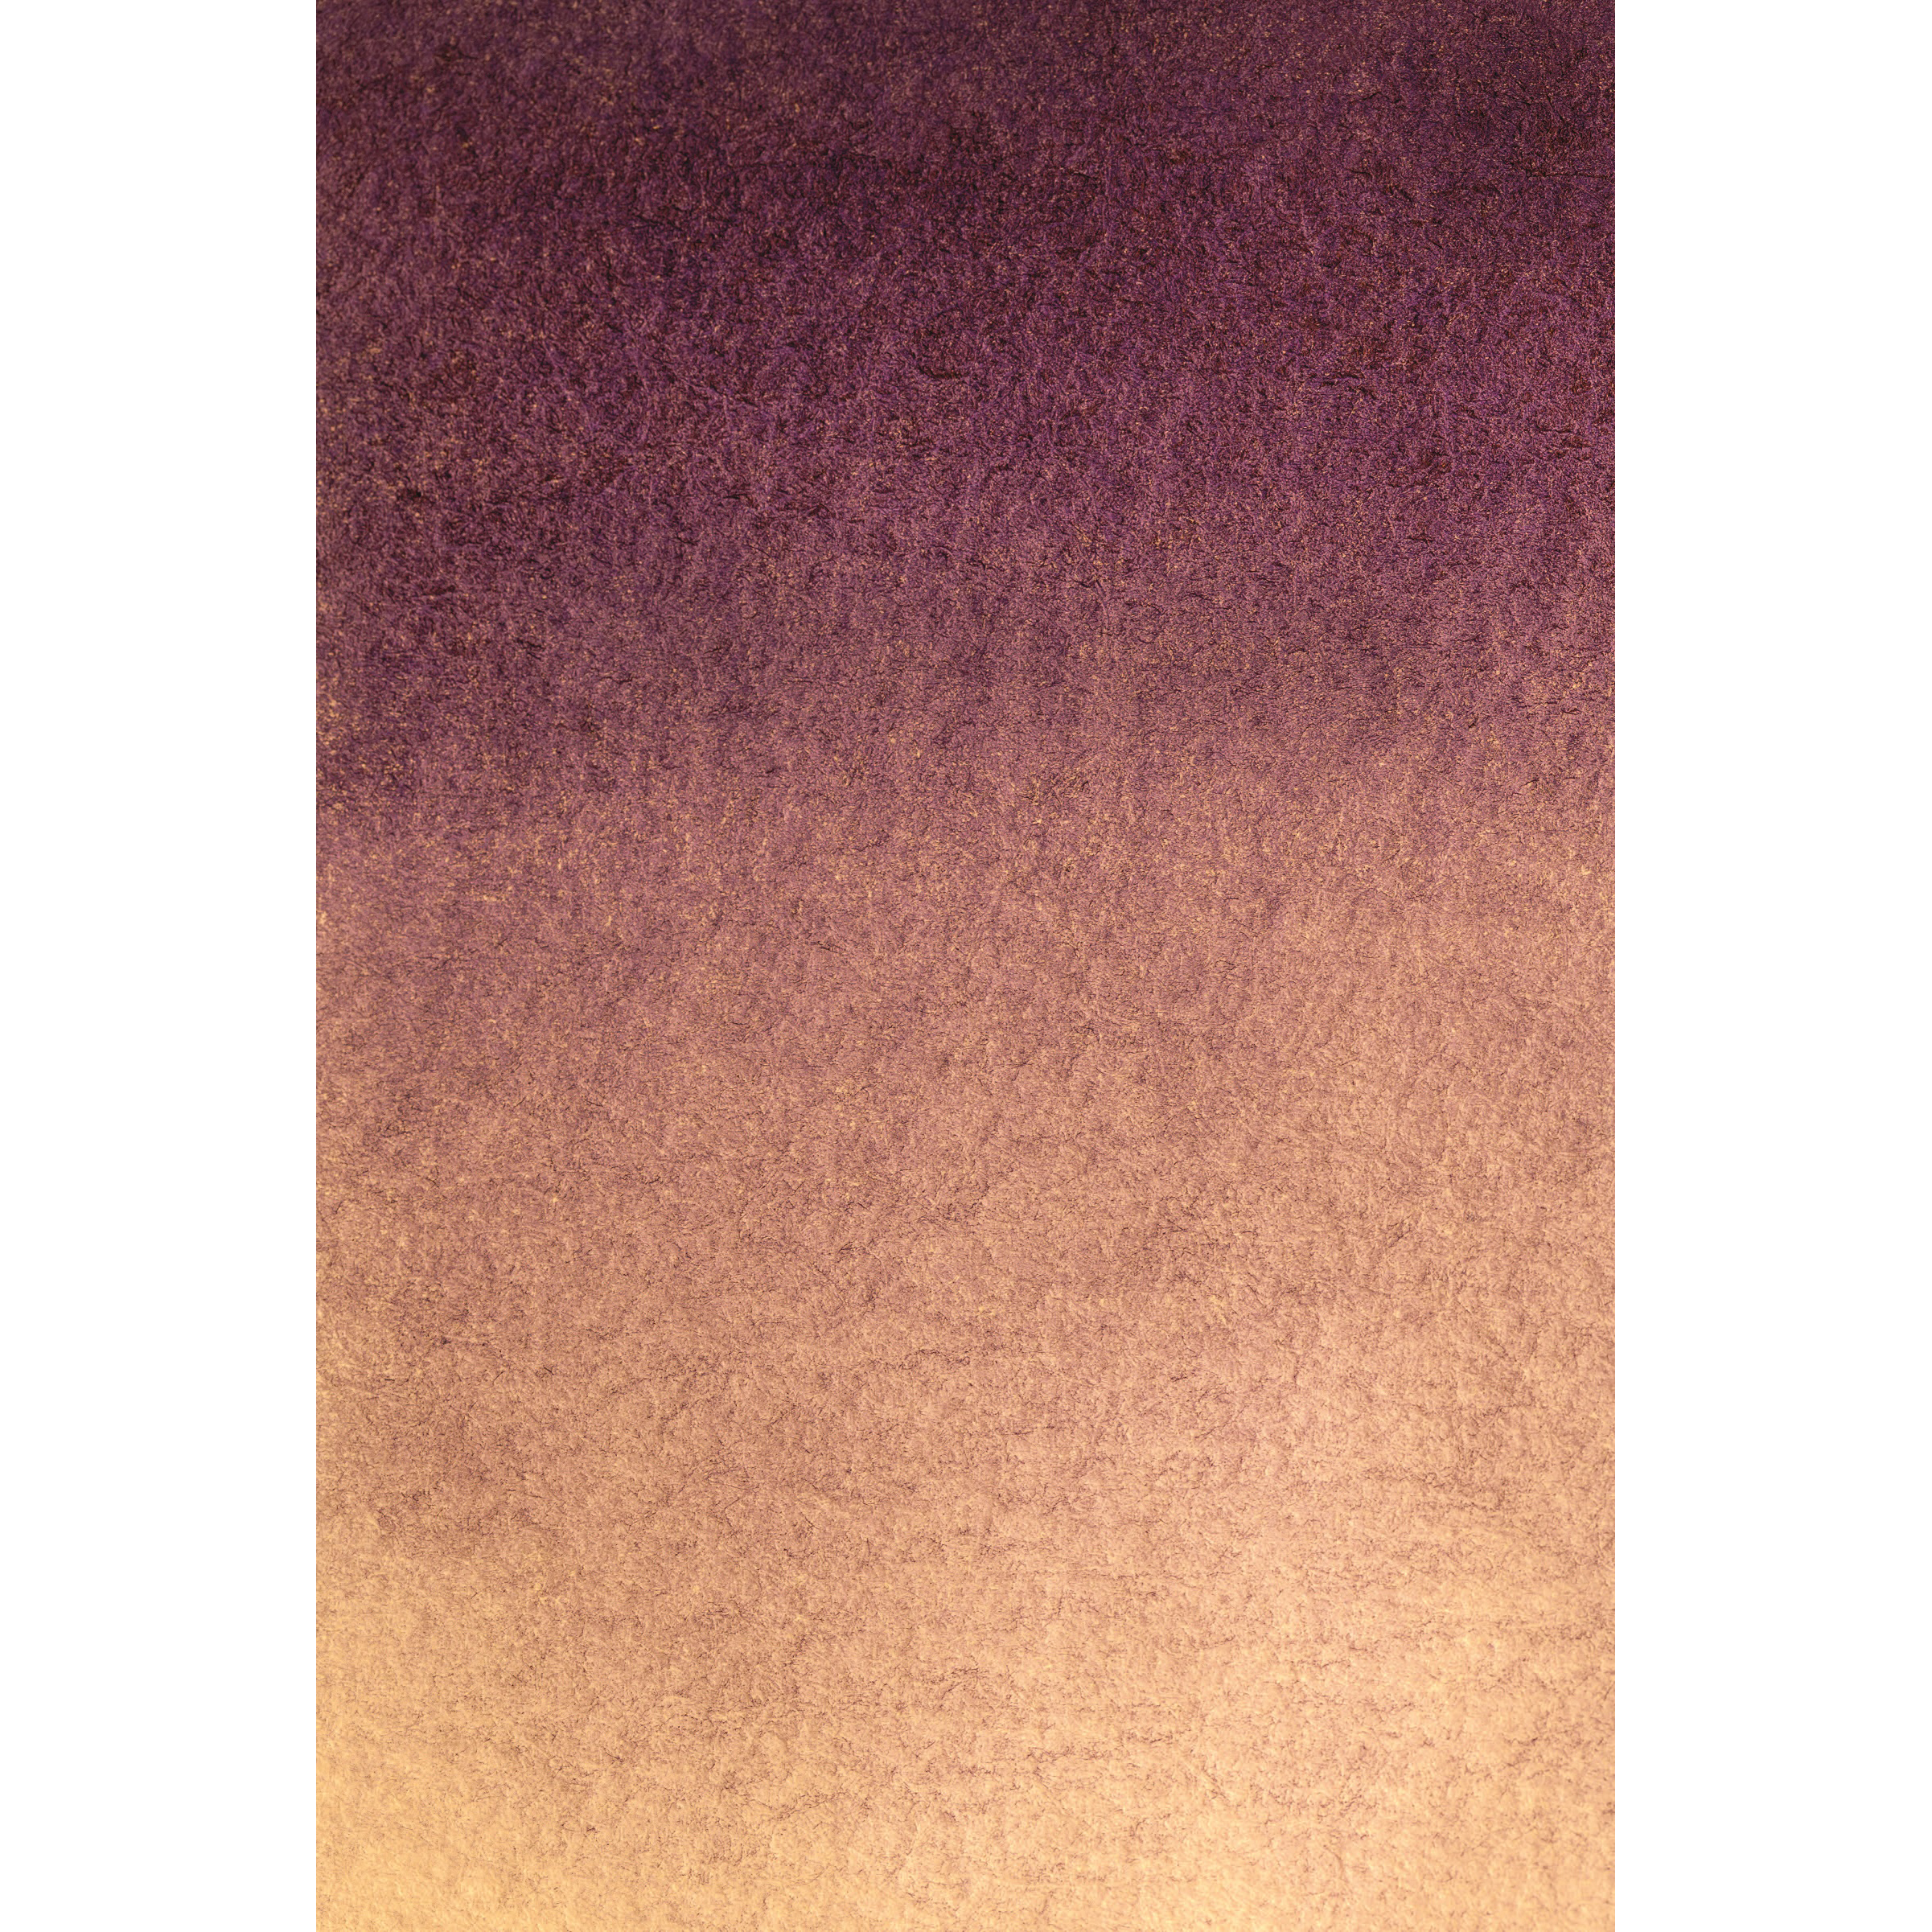 Fondo de Tela BRESSER con Estampado fotográfico 80 x 120 cm - Beige púrpura